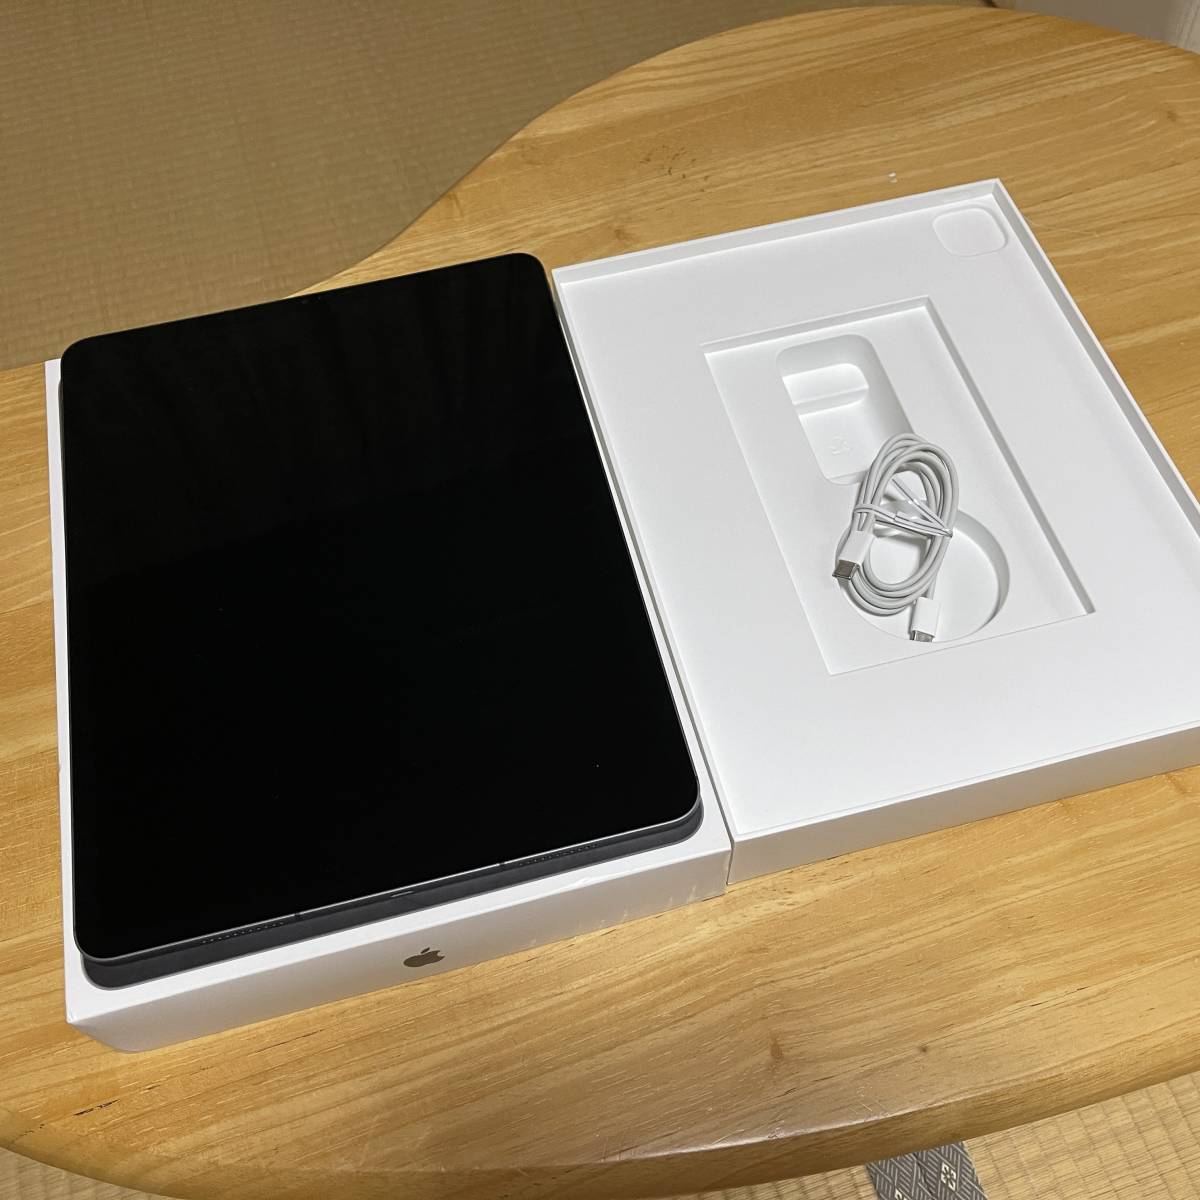 送料無料] iPad Pro 12.9 第5世代 Wi-Fi 128GB pn-jambi.go.id